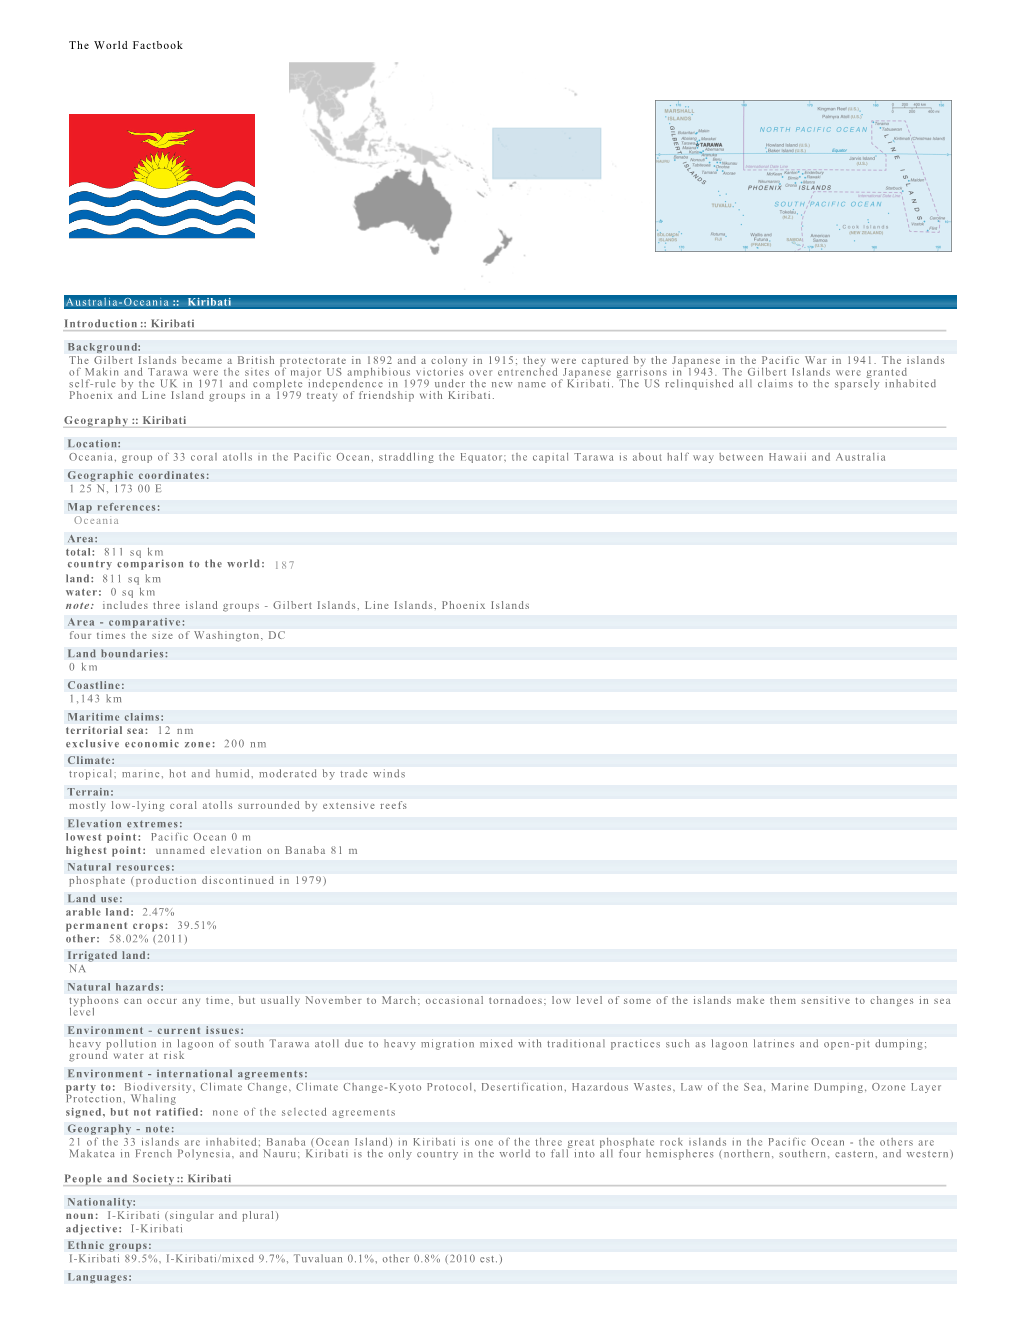 The World Factbook Australia-Oceania :: Kiribati Introduction